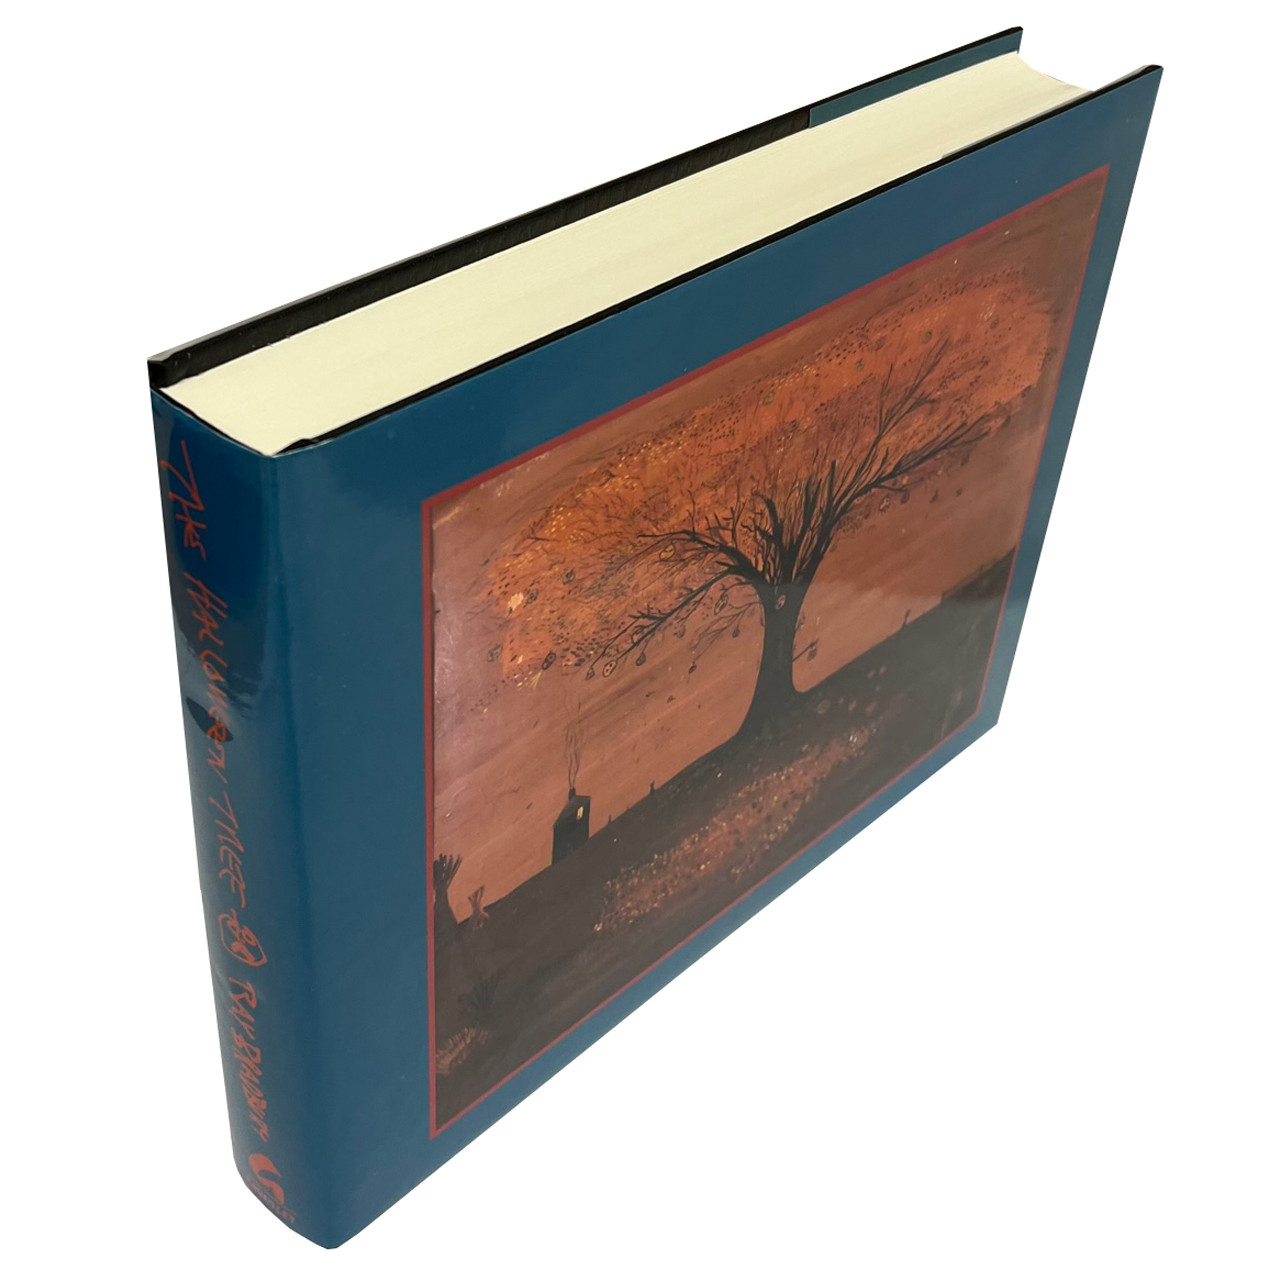 Ray Bradbury "The Halloween Tree" Slipcased Signed Limited Edition No. 151 of 750  [Very Fine]